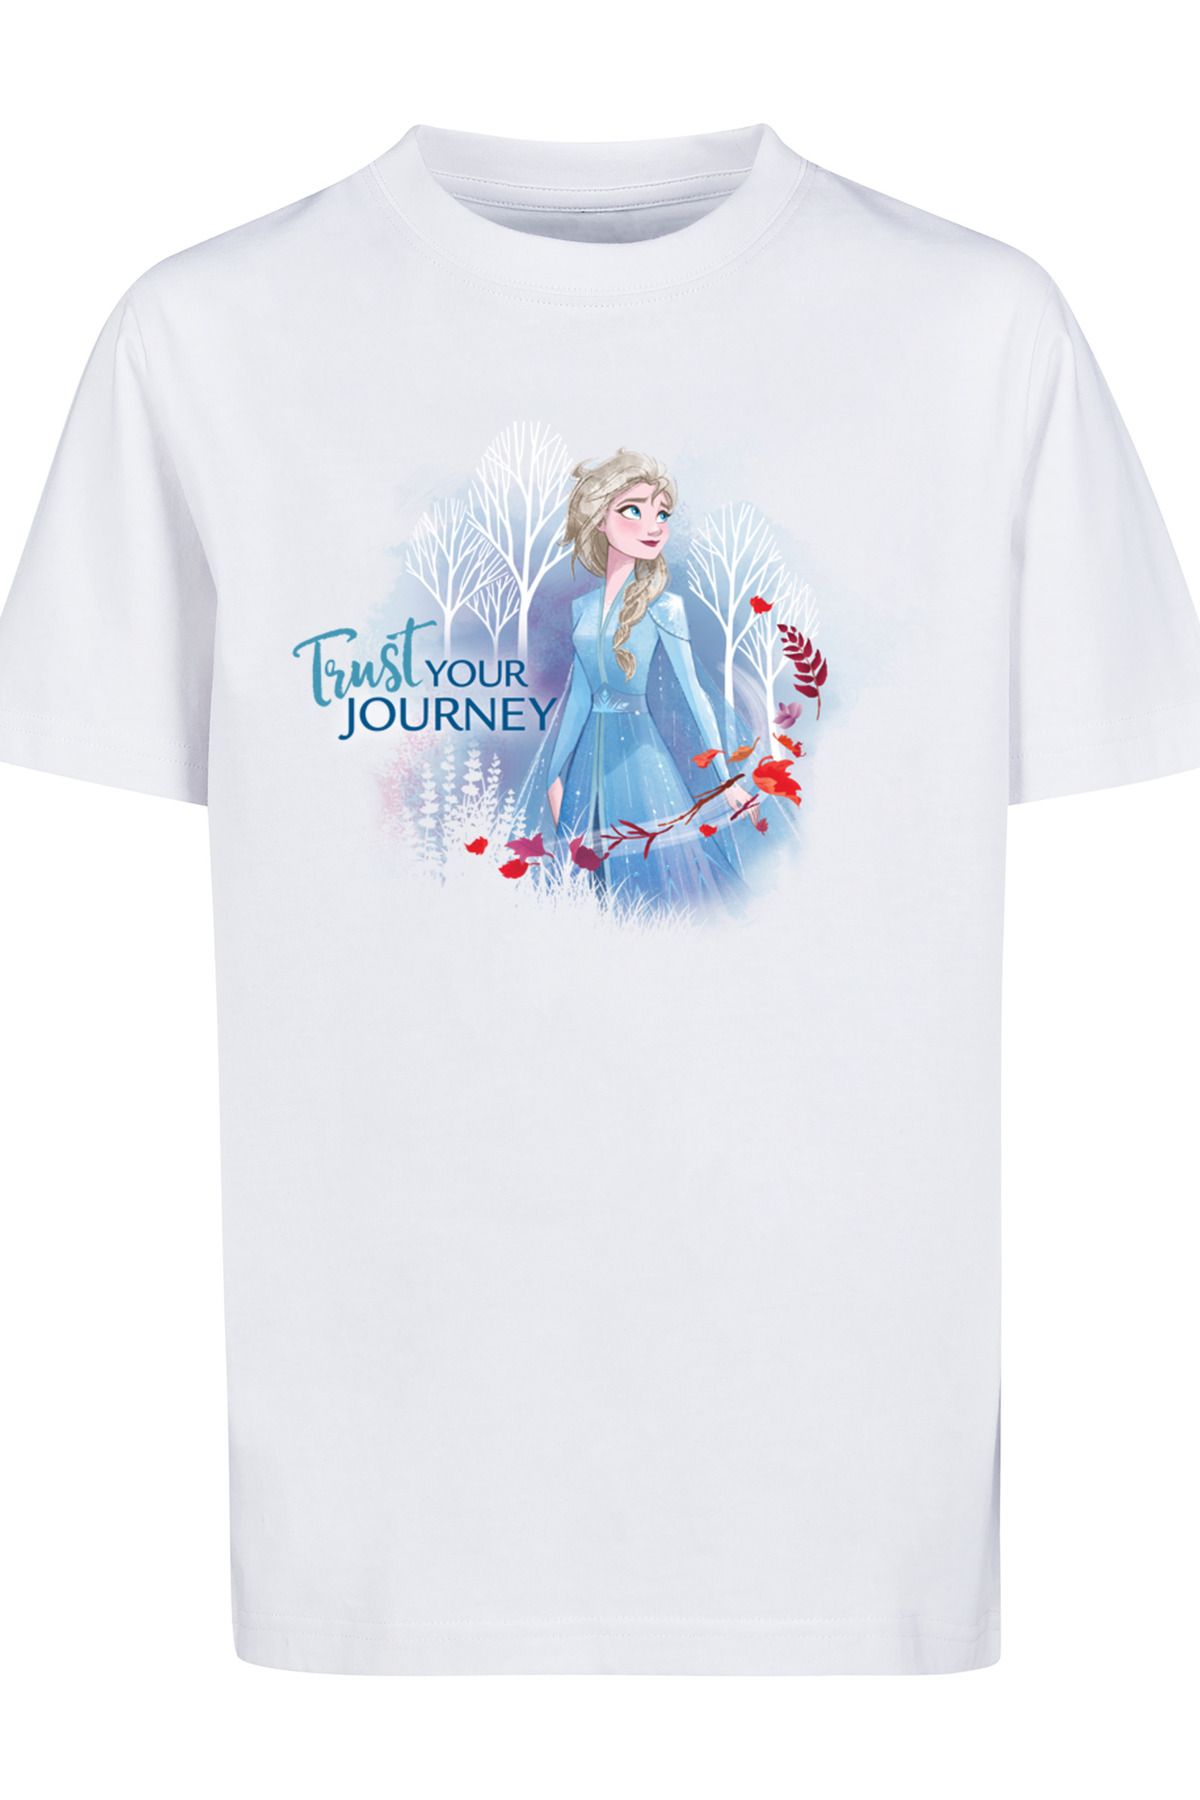 Trendyol mit Kinder Your Shirt Basic Frozen Trust 2 - Kids Disney T- F4NT4STIC Journey-WHT